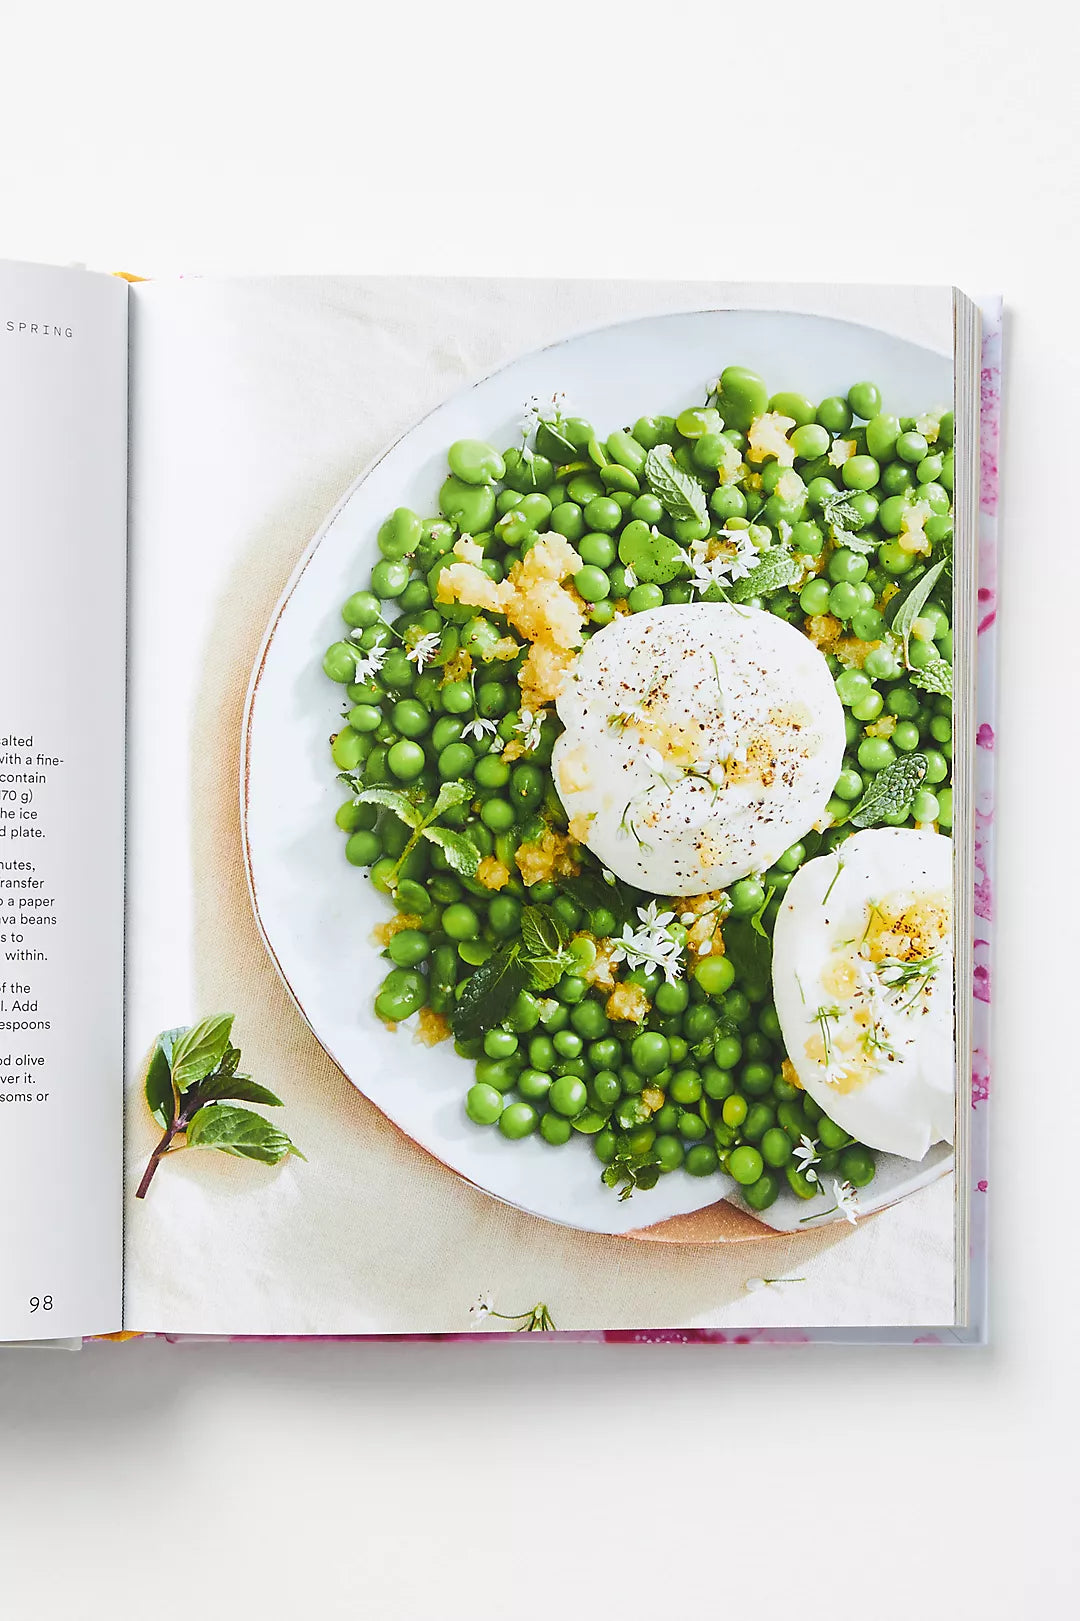 Salad Freak | Cookbook